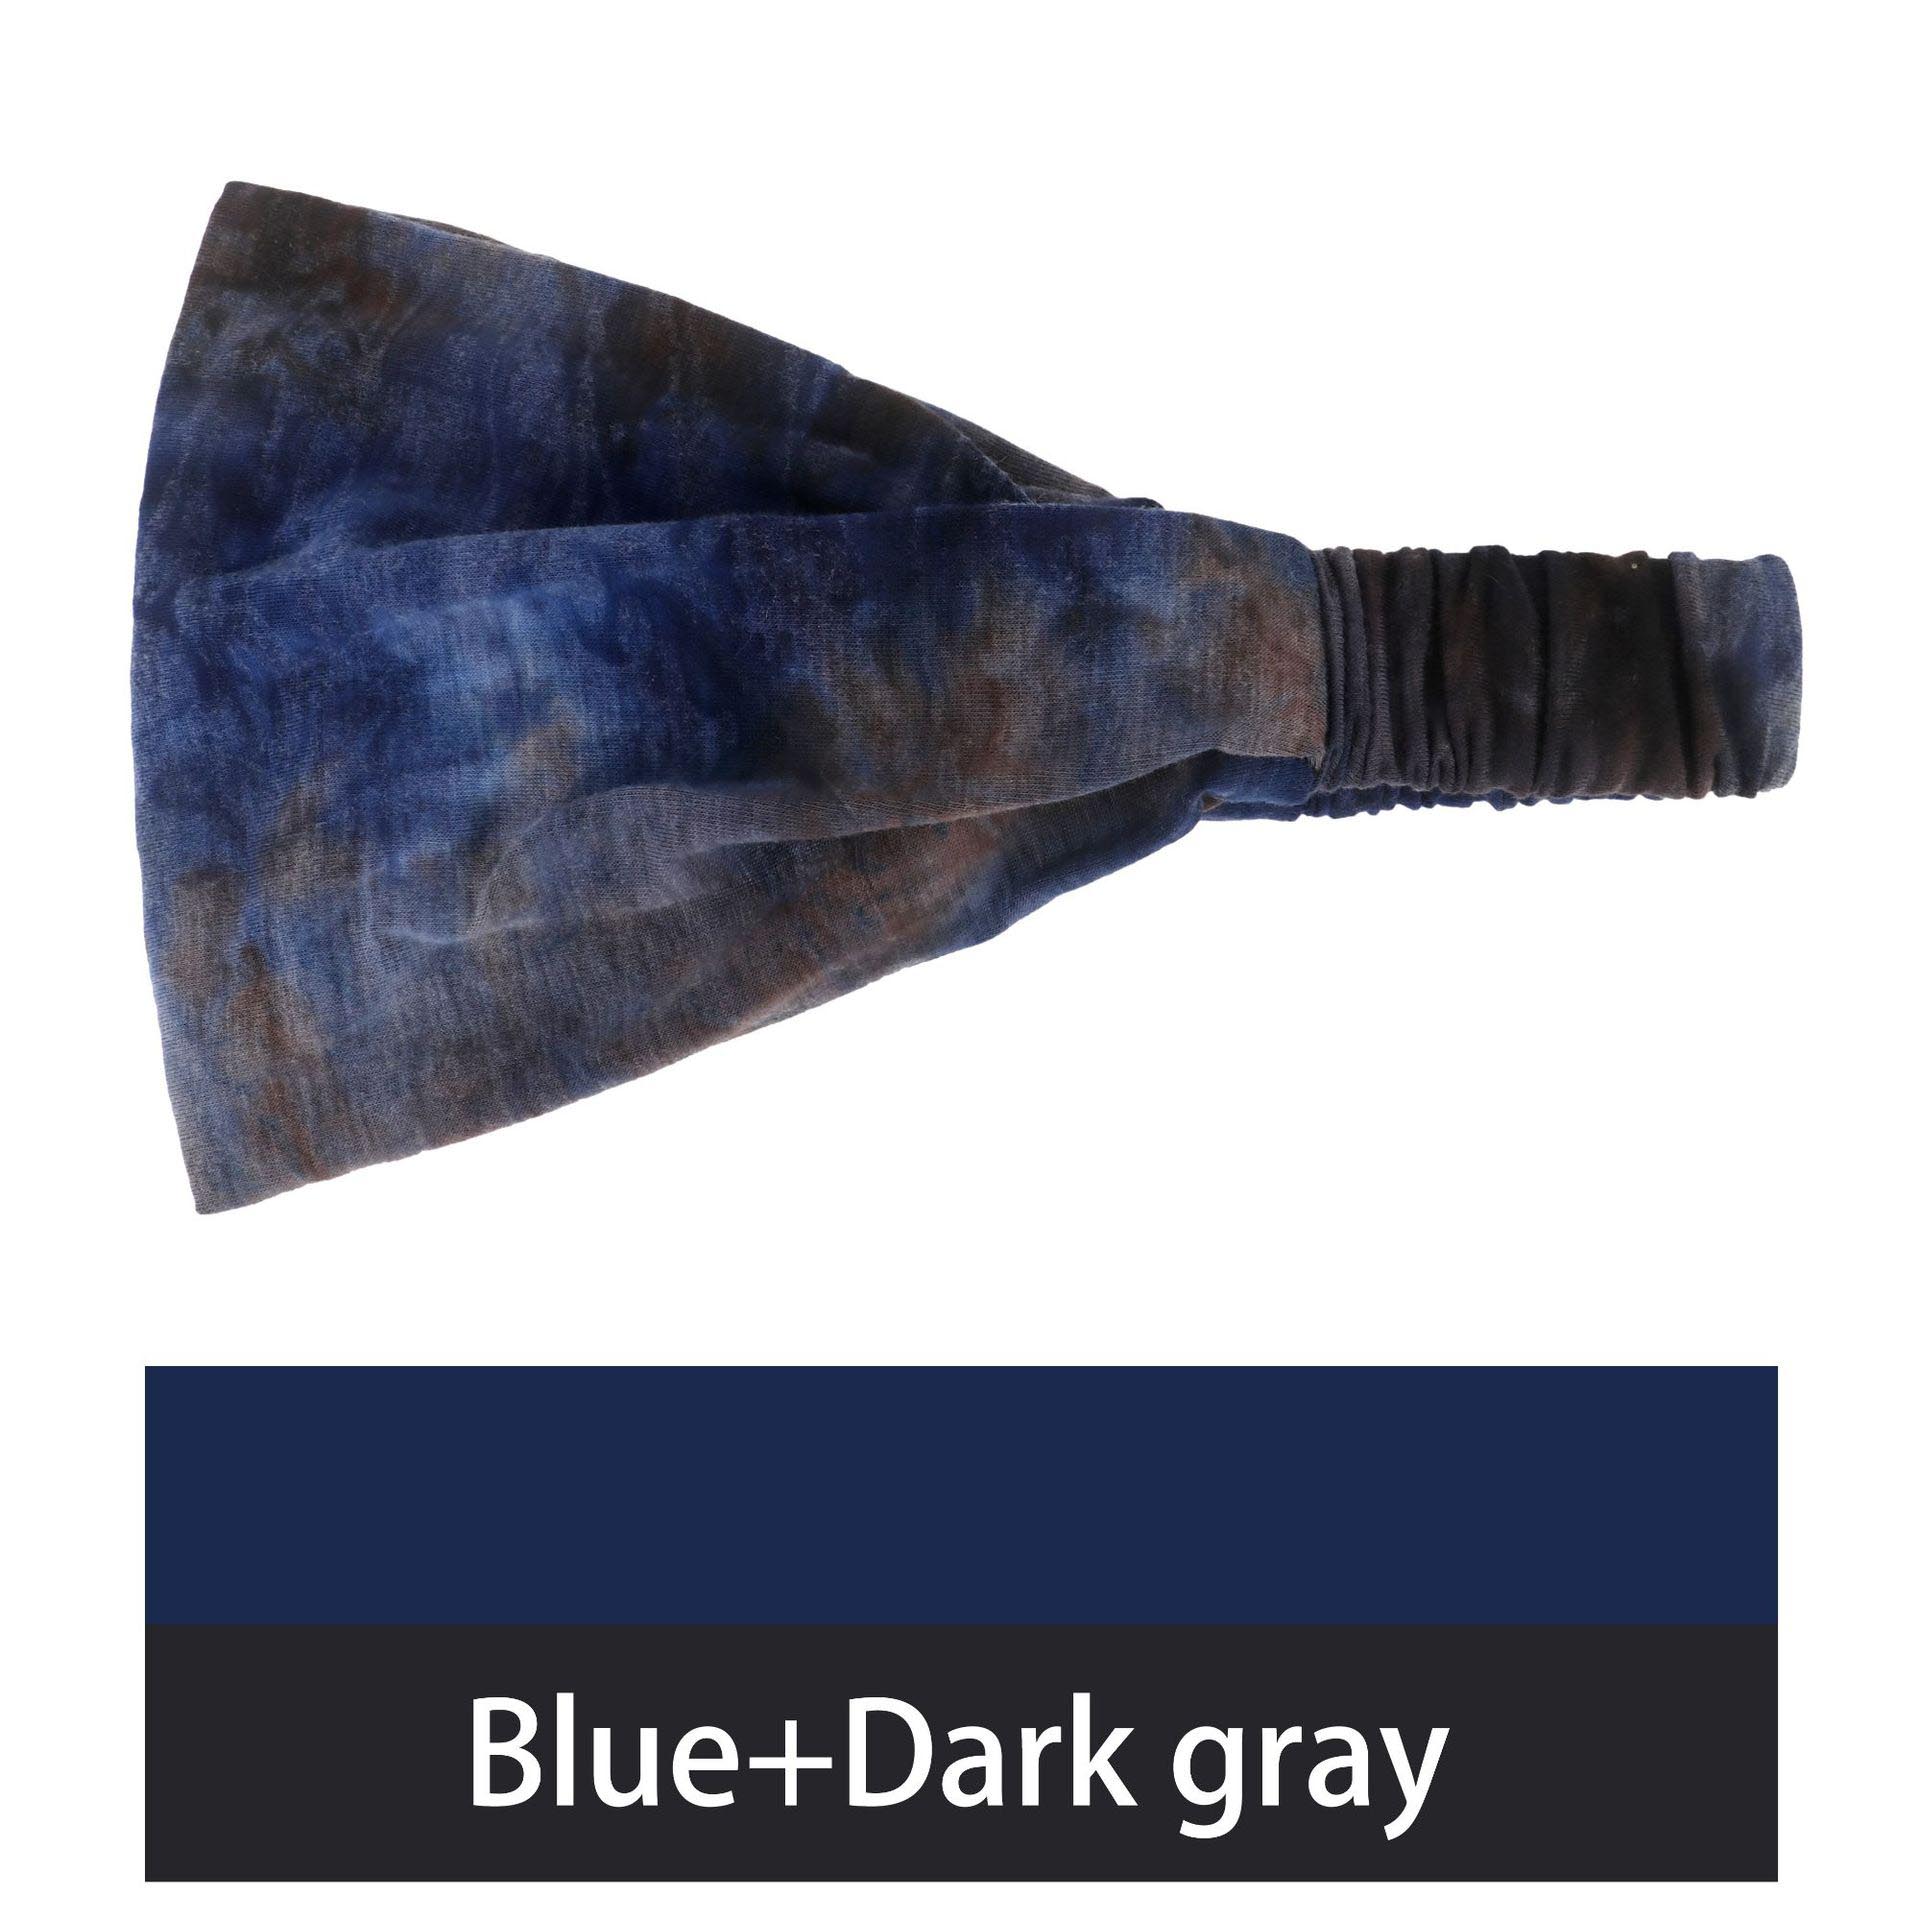 Blue and dark grey